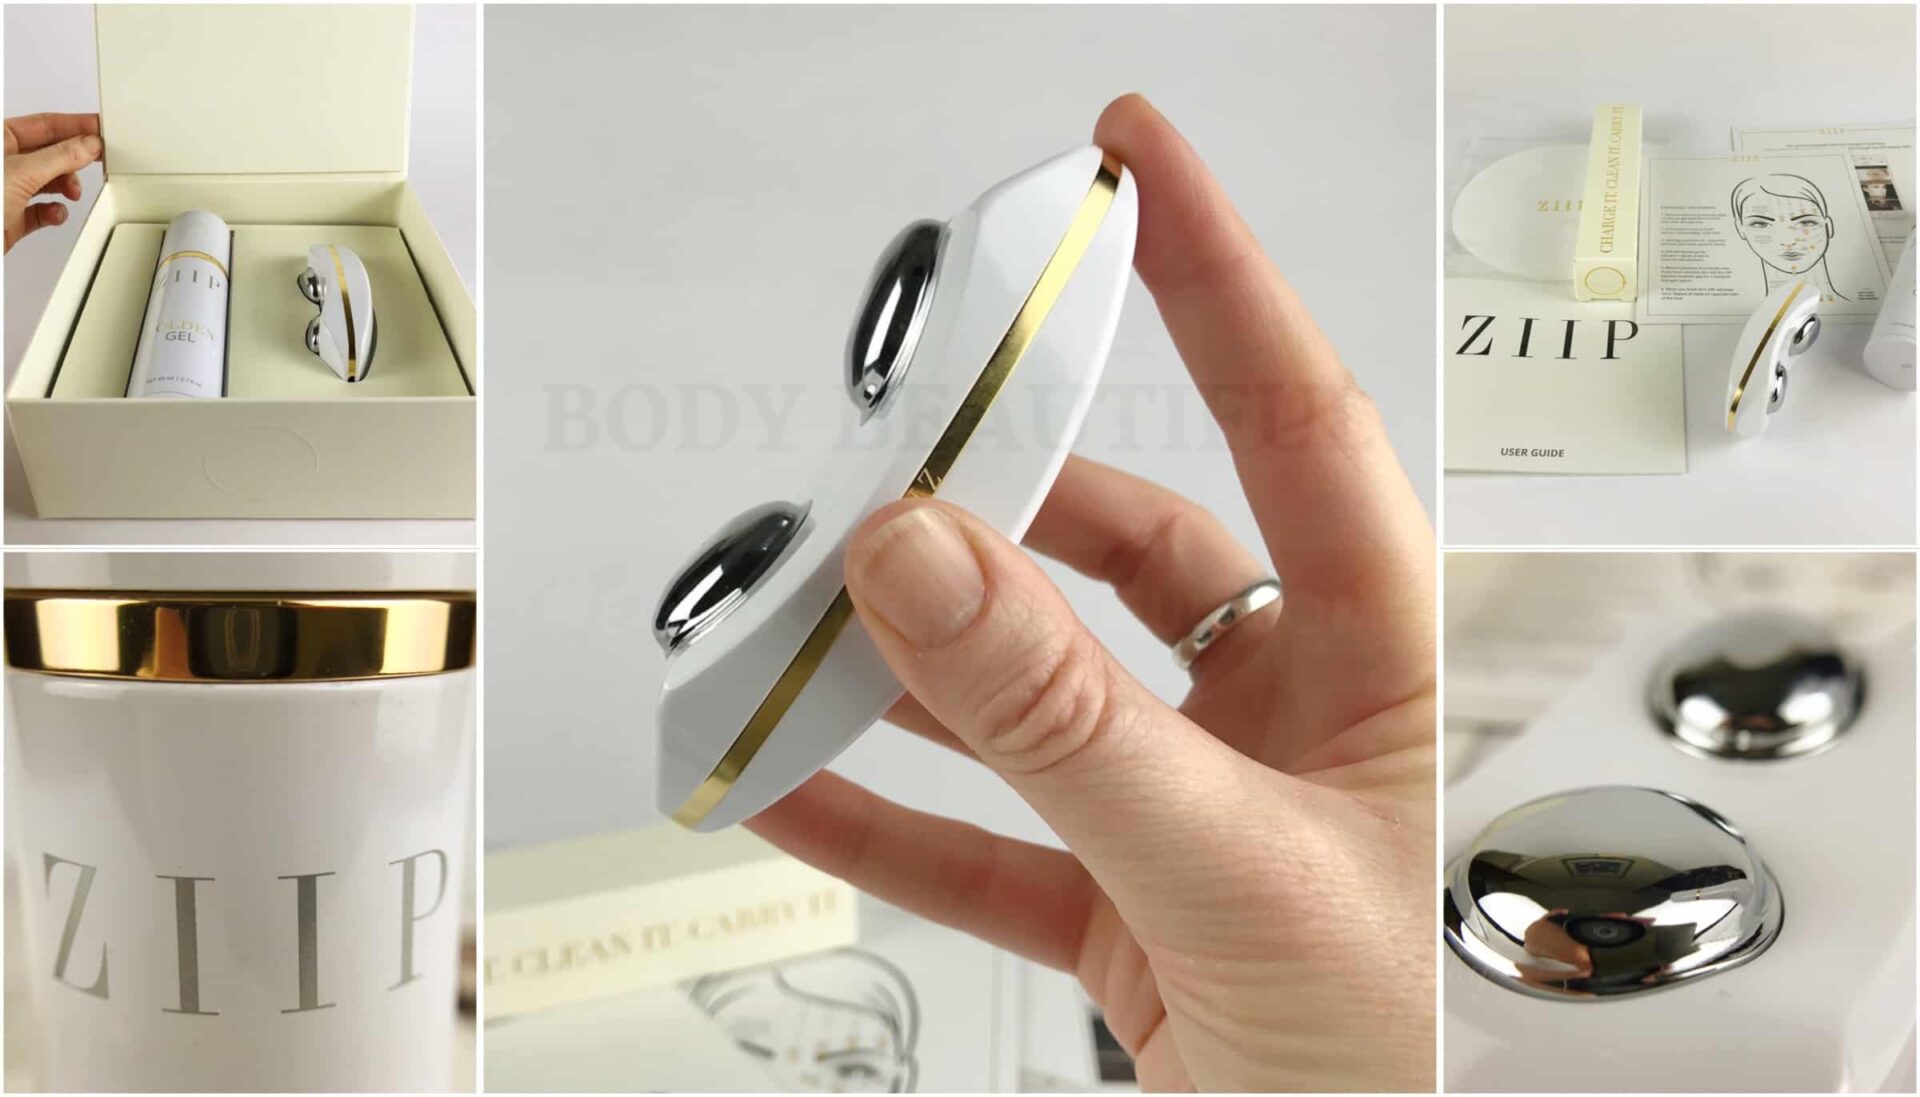 Ziip Nano Micro & Nanocurrent home beauty device review from WeAreBodyBeautiful.com